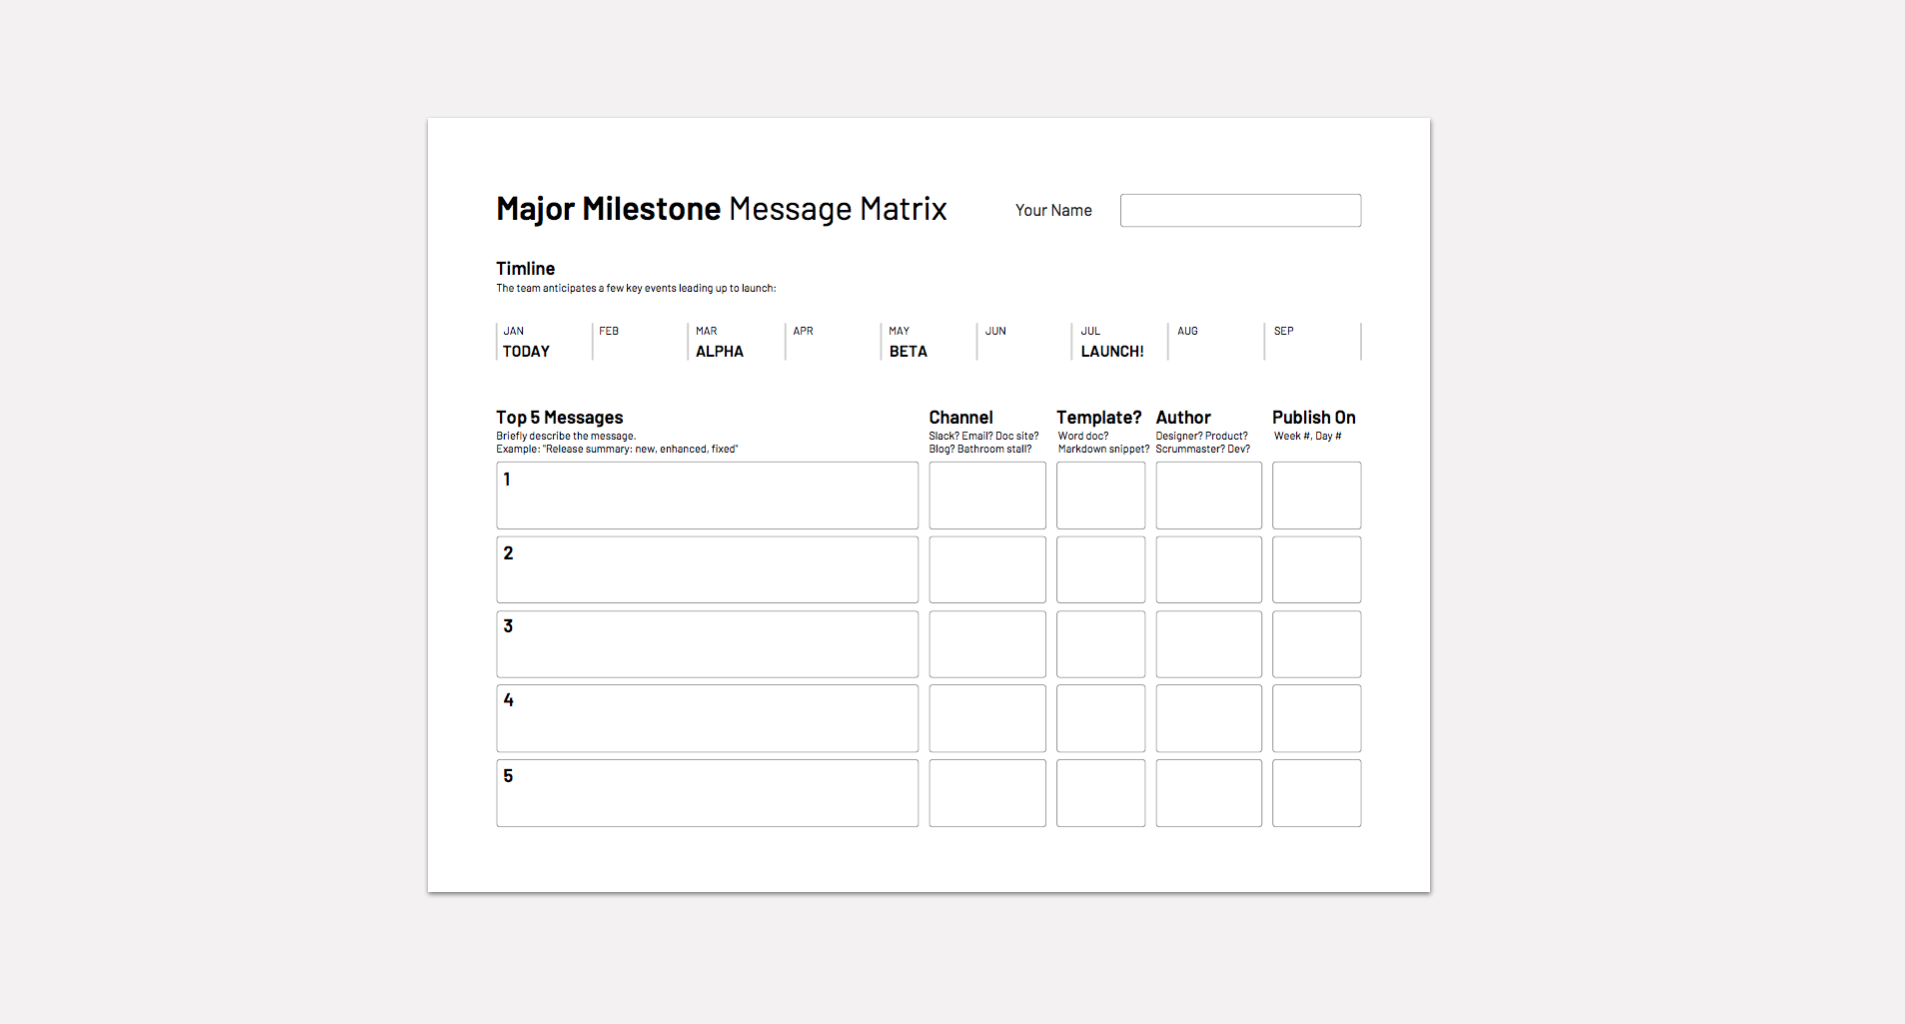 Paper template for message matrix of a major milestone